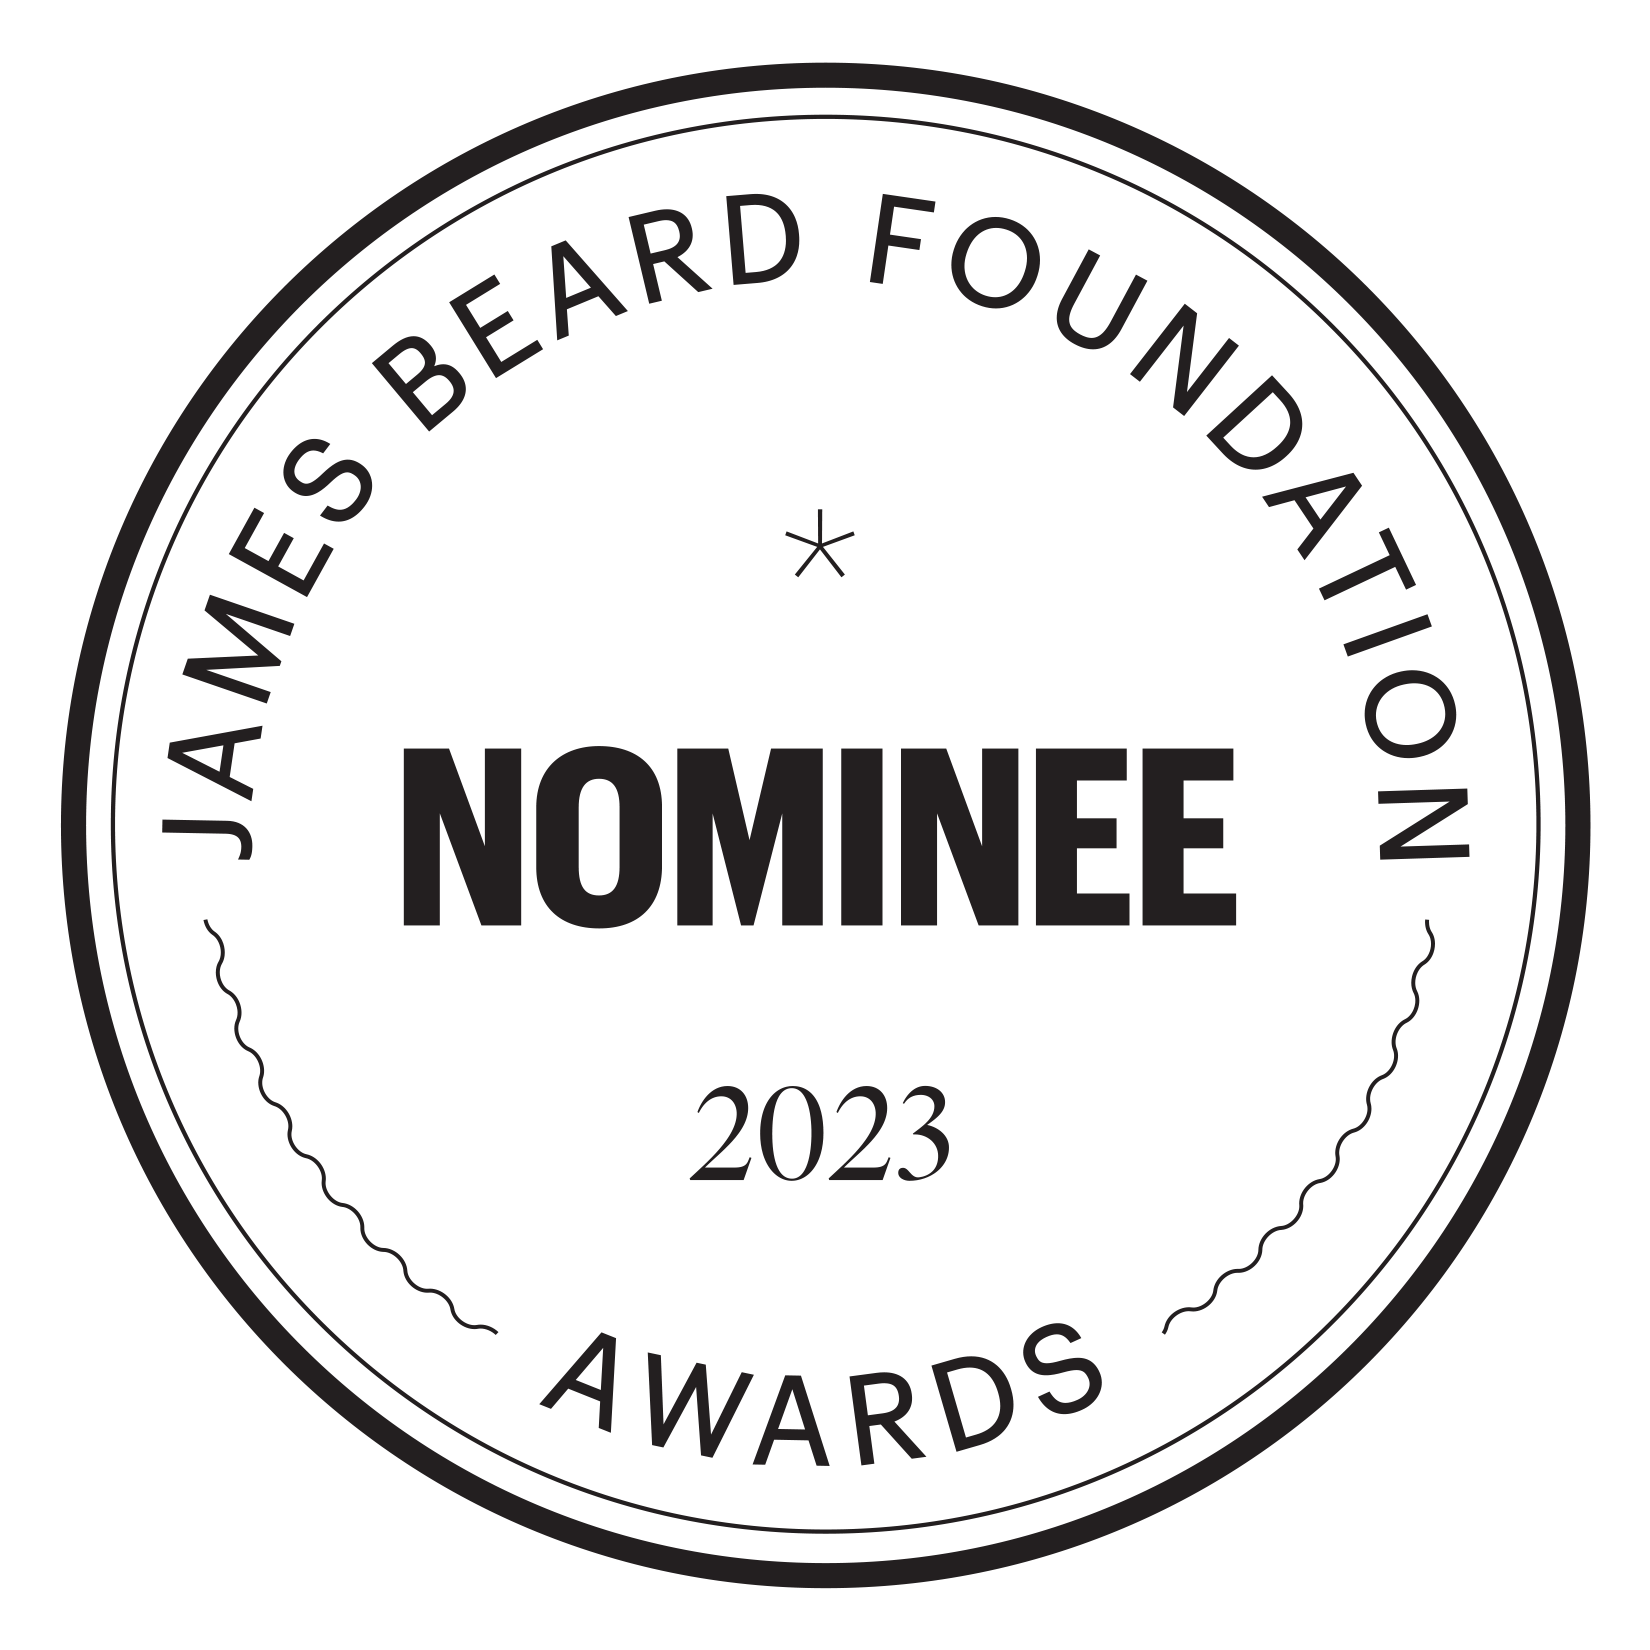 James Beard Foundation Awards 2023 Nominee